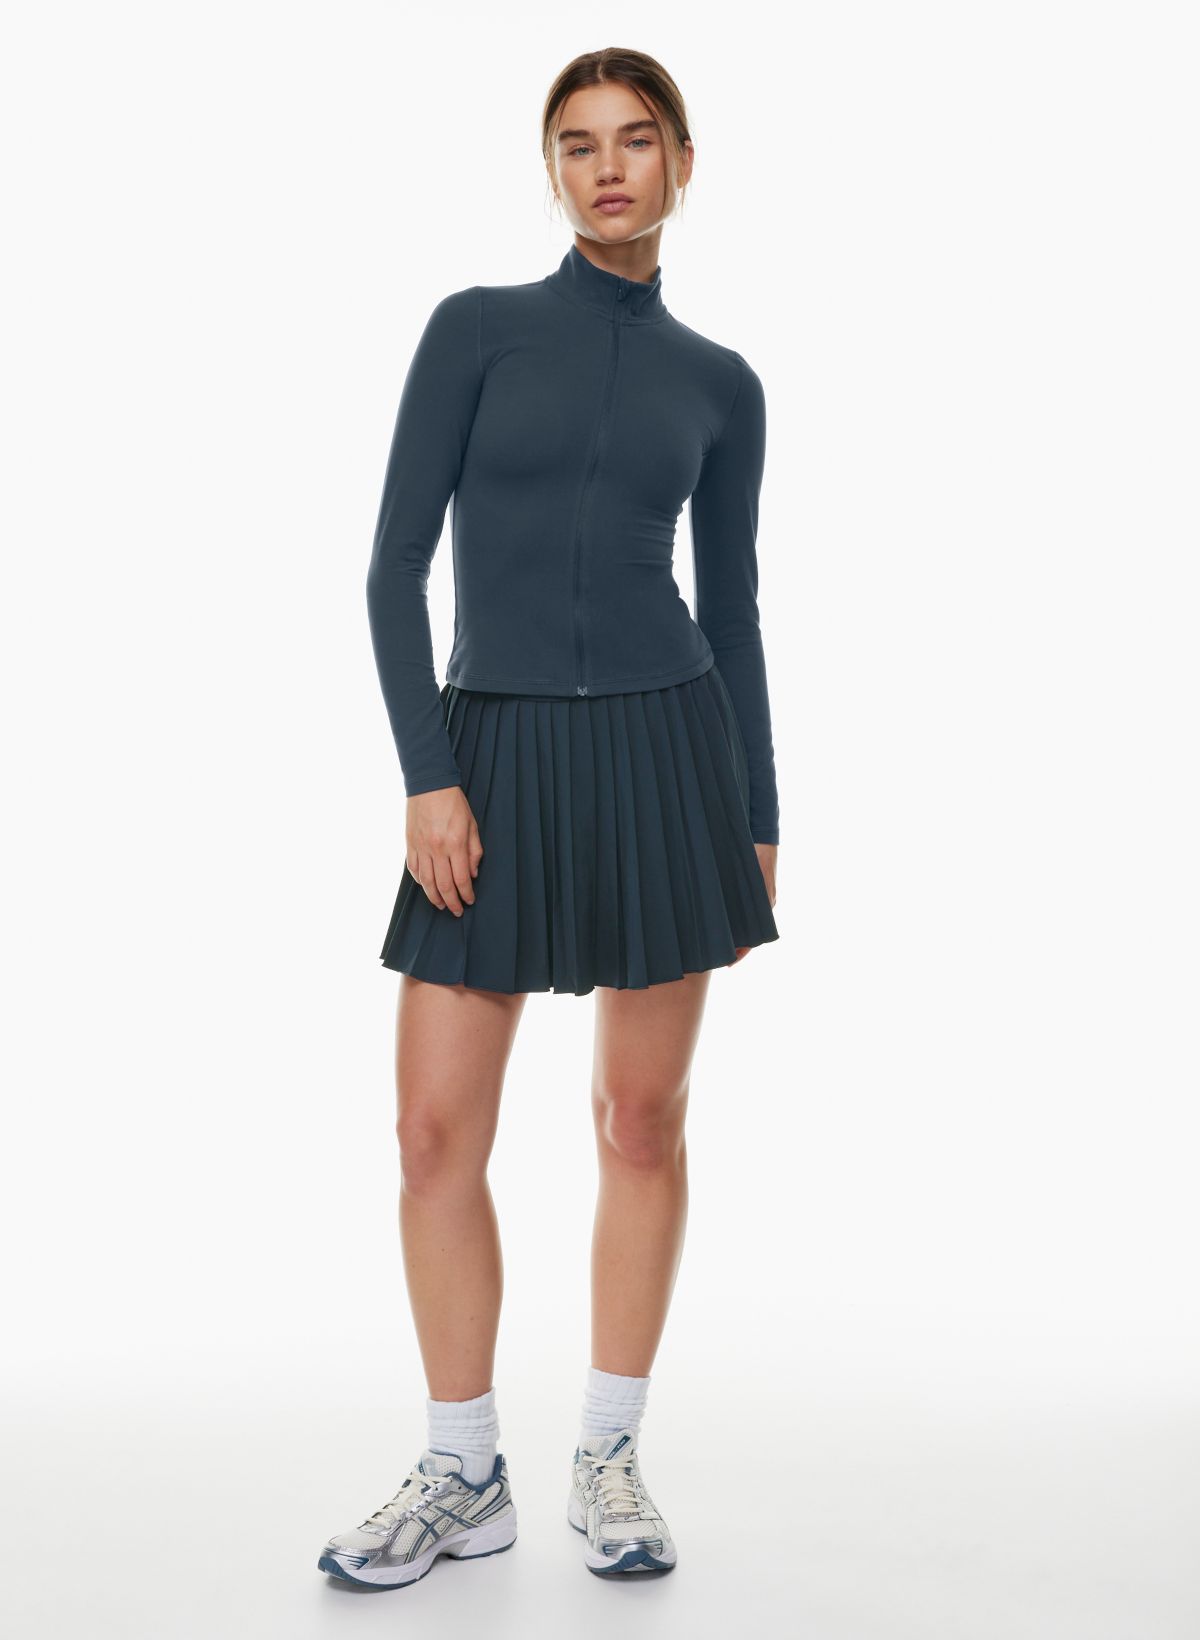 Skorts Skirt for Women with Pockets Golf Tennis Skort Athletic Skirt High  Waisted Casual Dressy